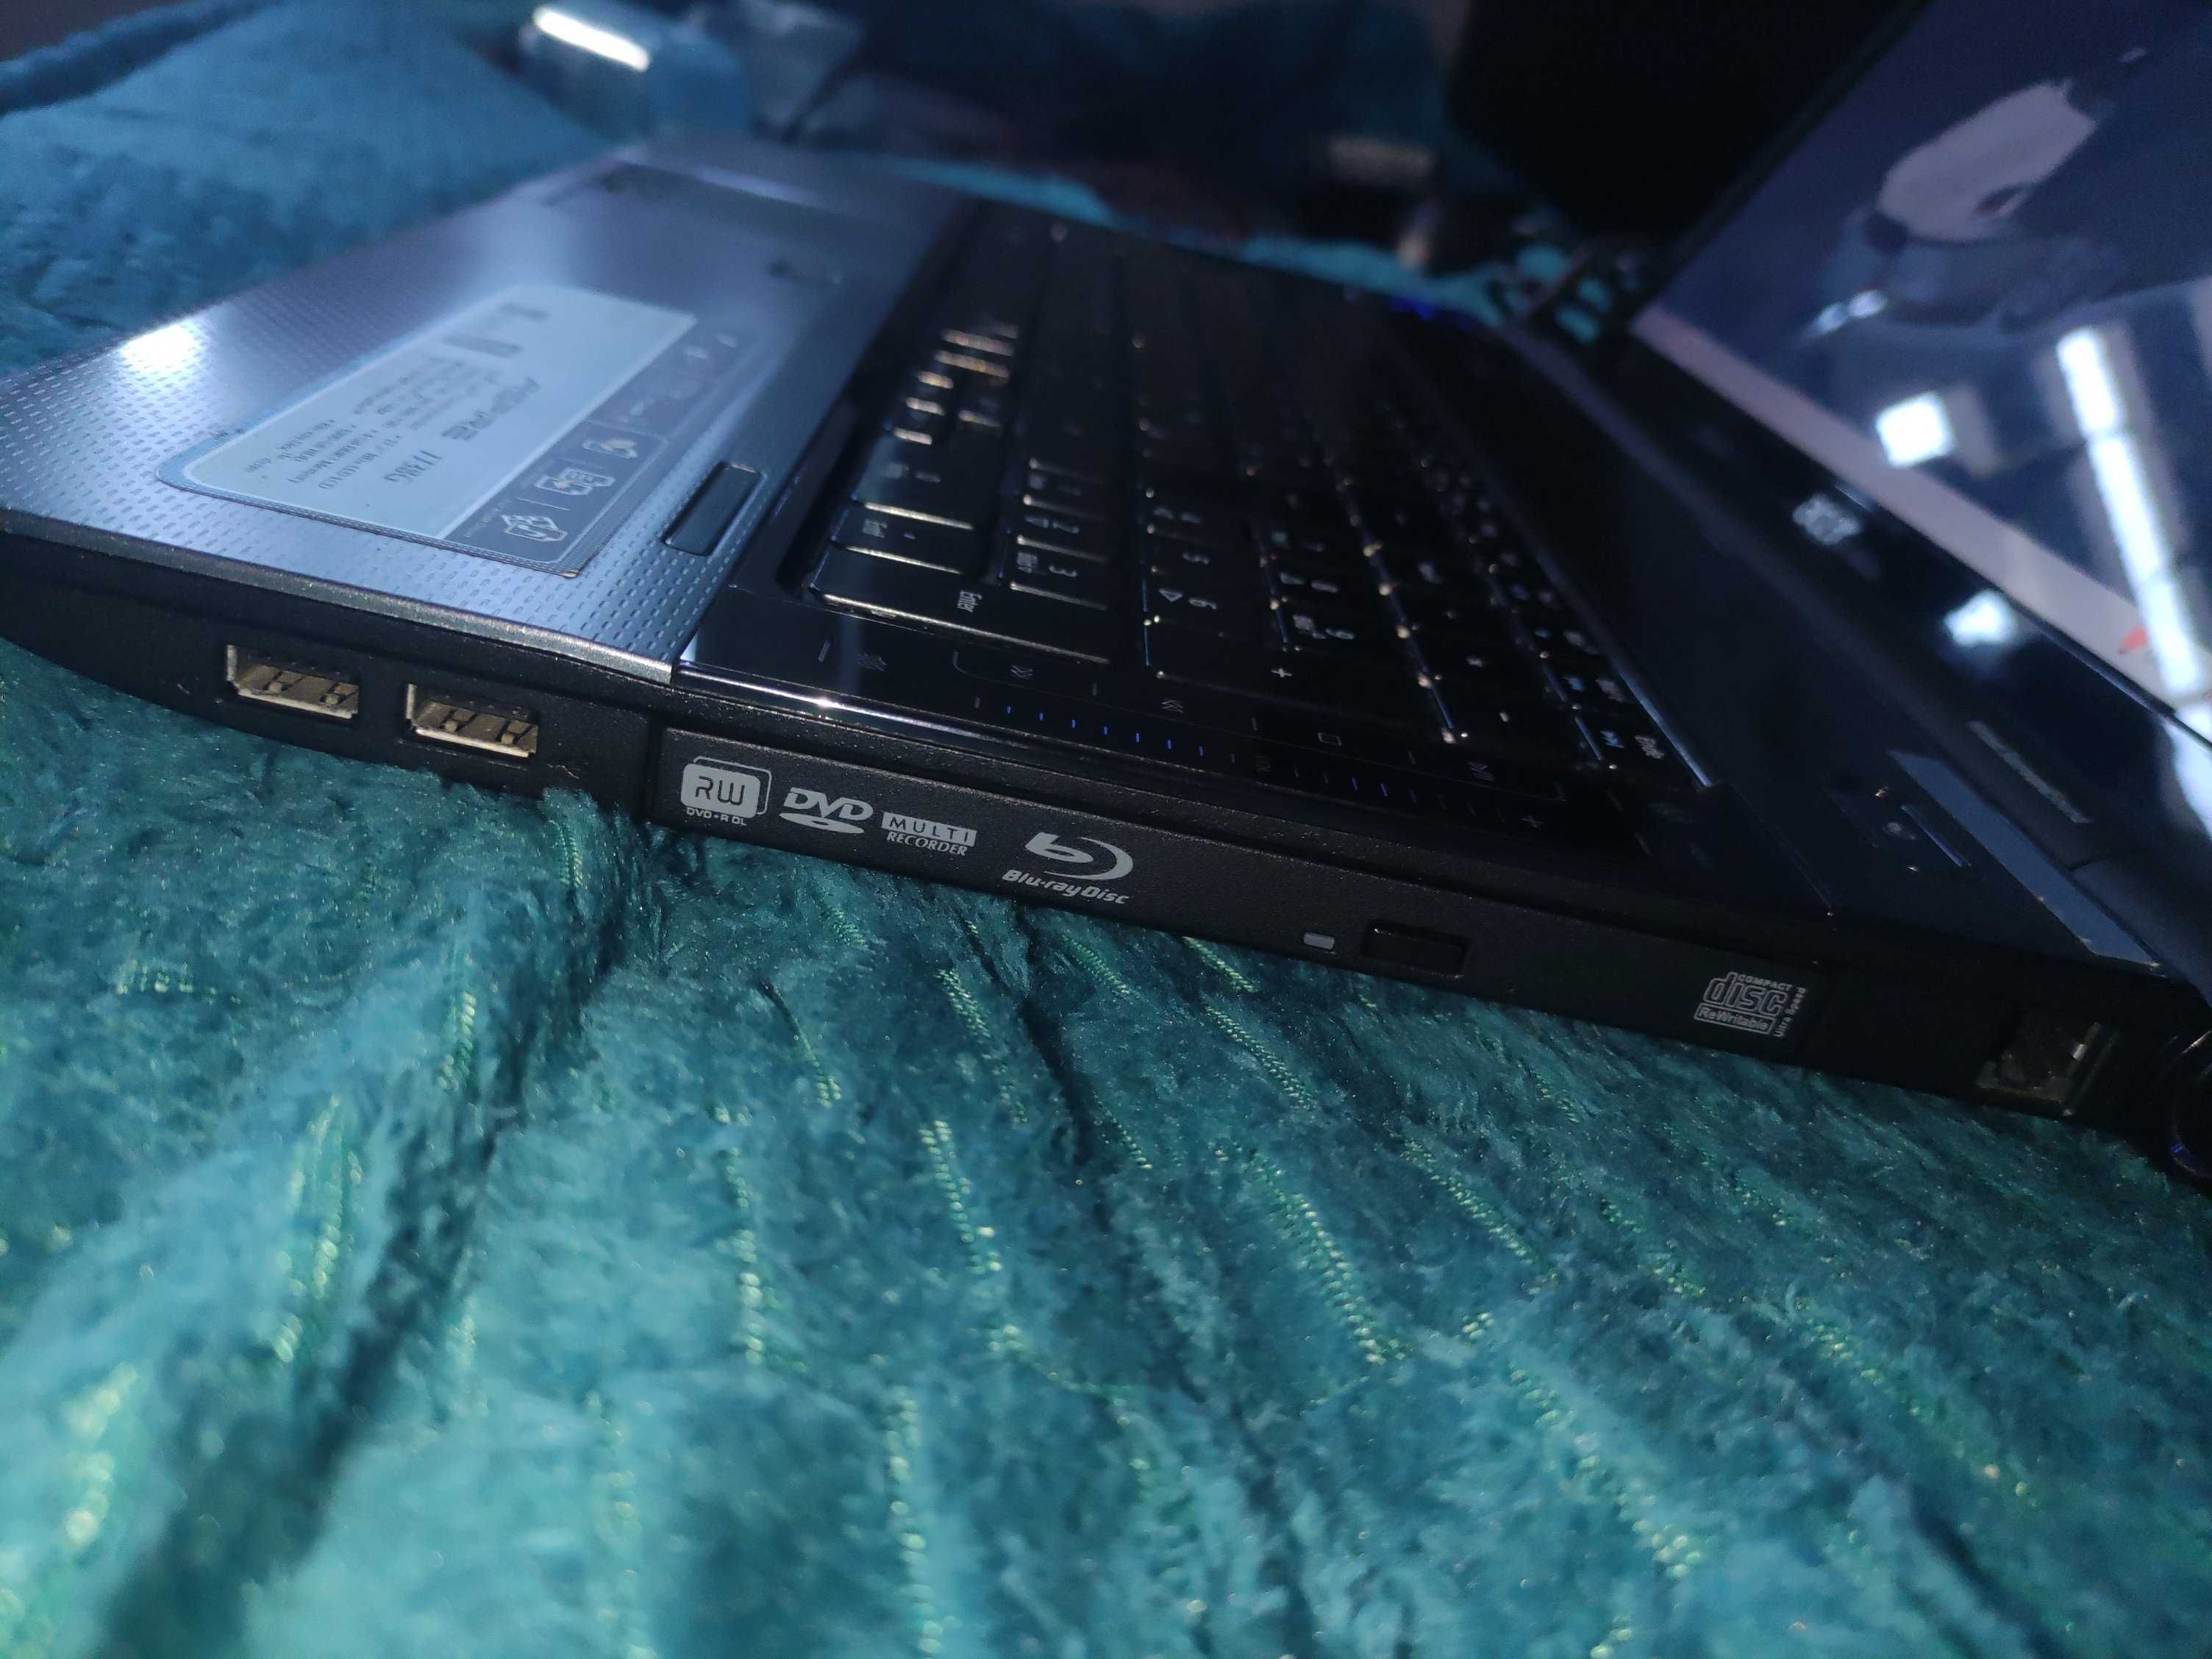 Laptop Acer 7738g Quadcore Q9000 blu-ray SSD+HD retro Nvidia